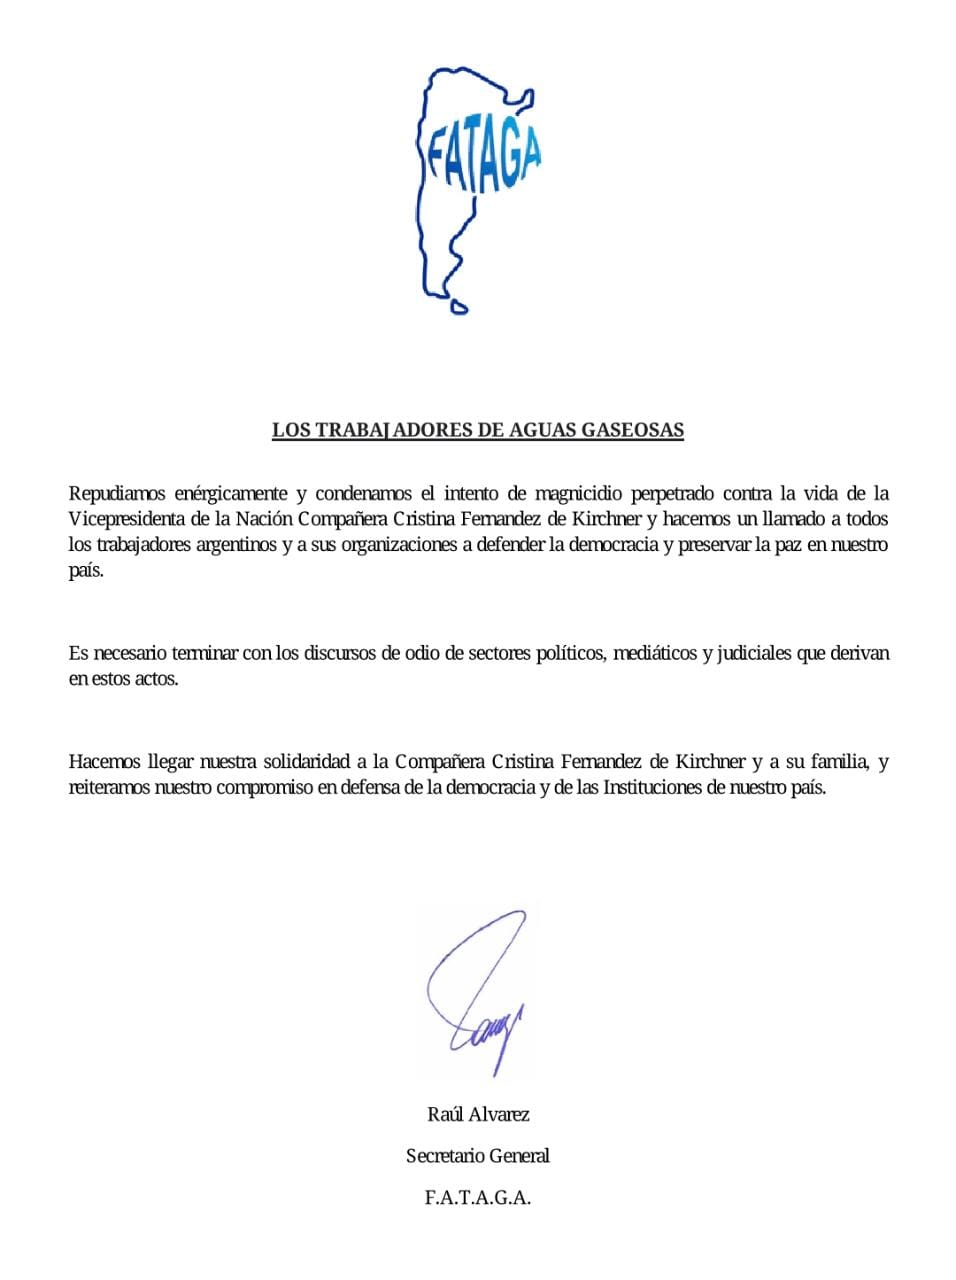 FATAGA repudia el intento de magnicidio contra Cristina Kirchner